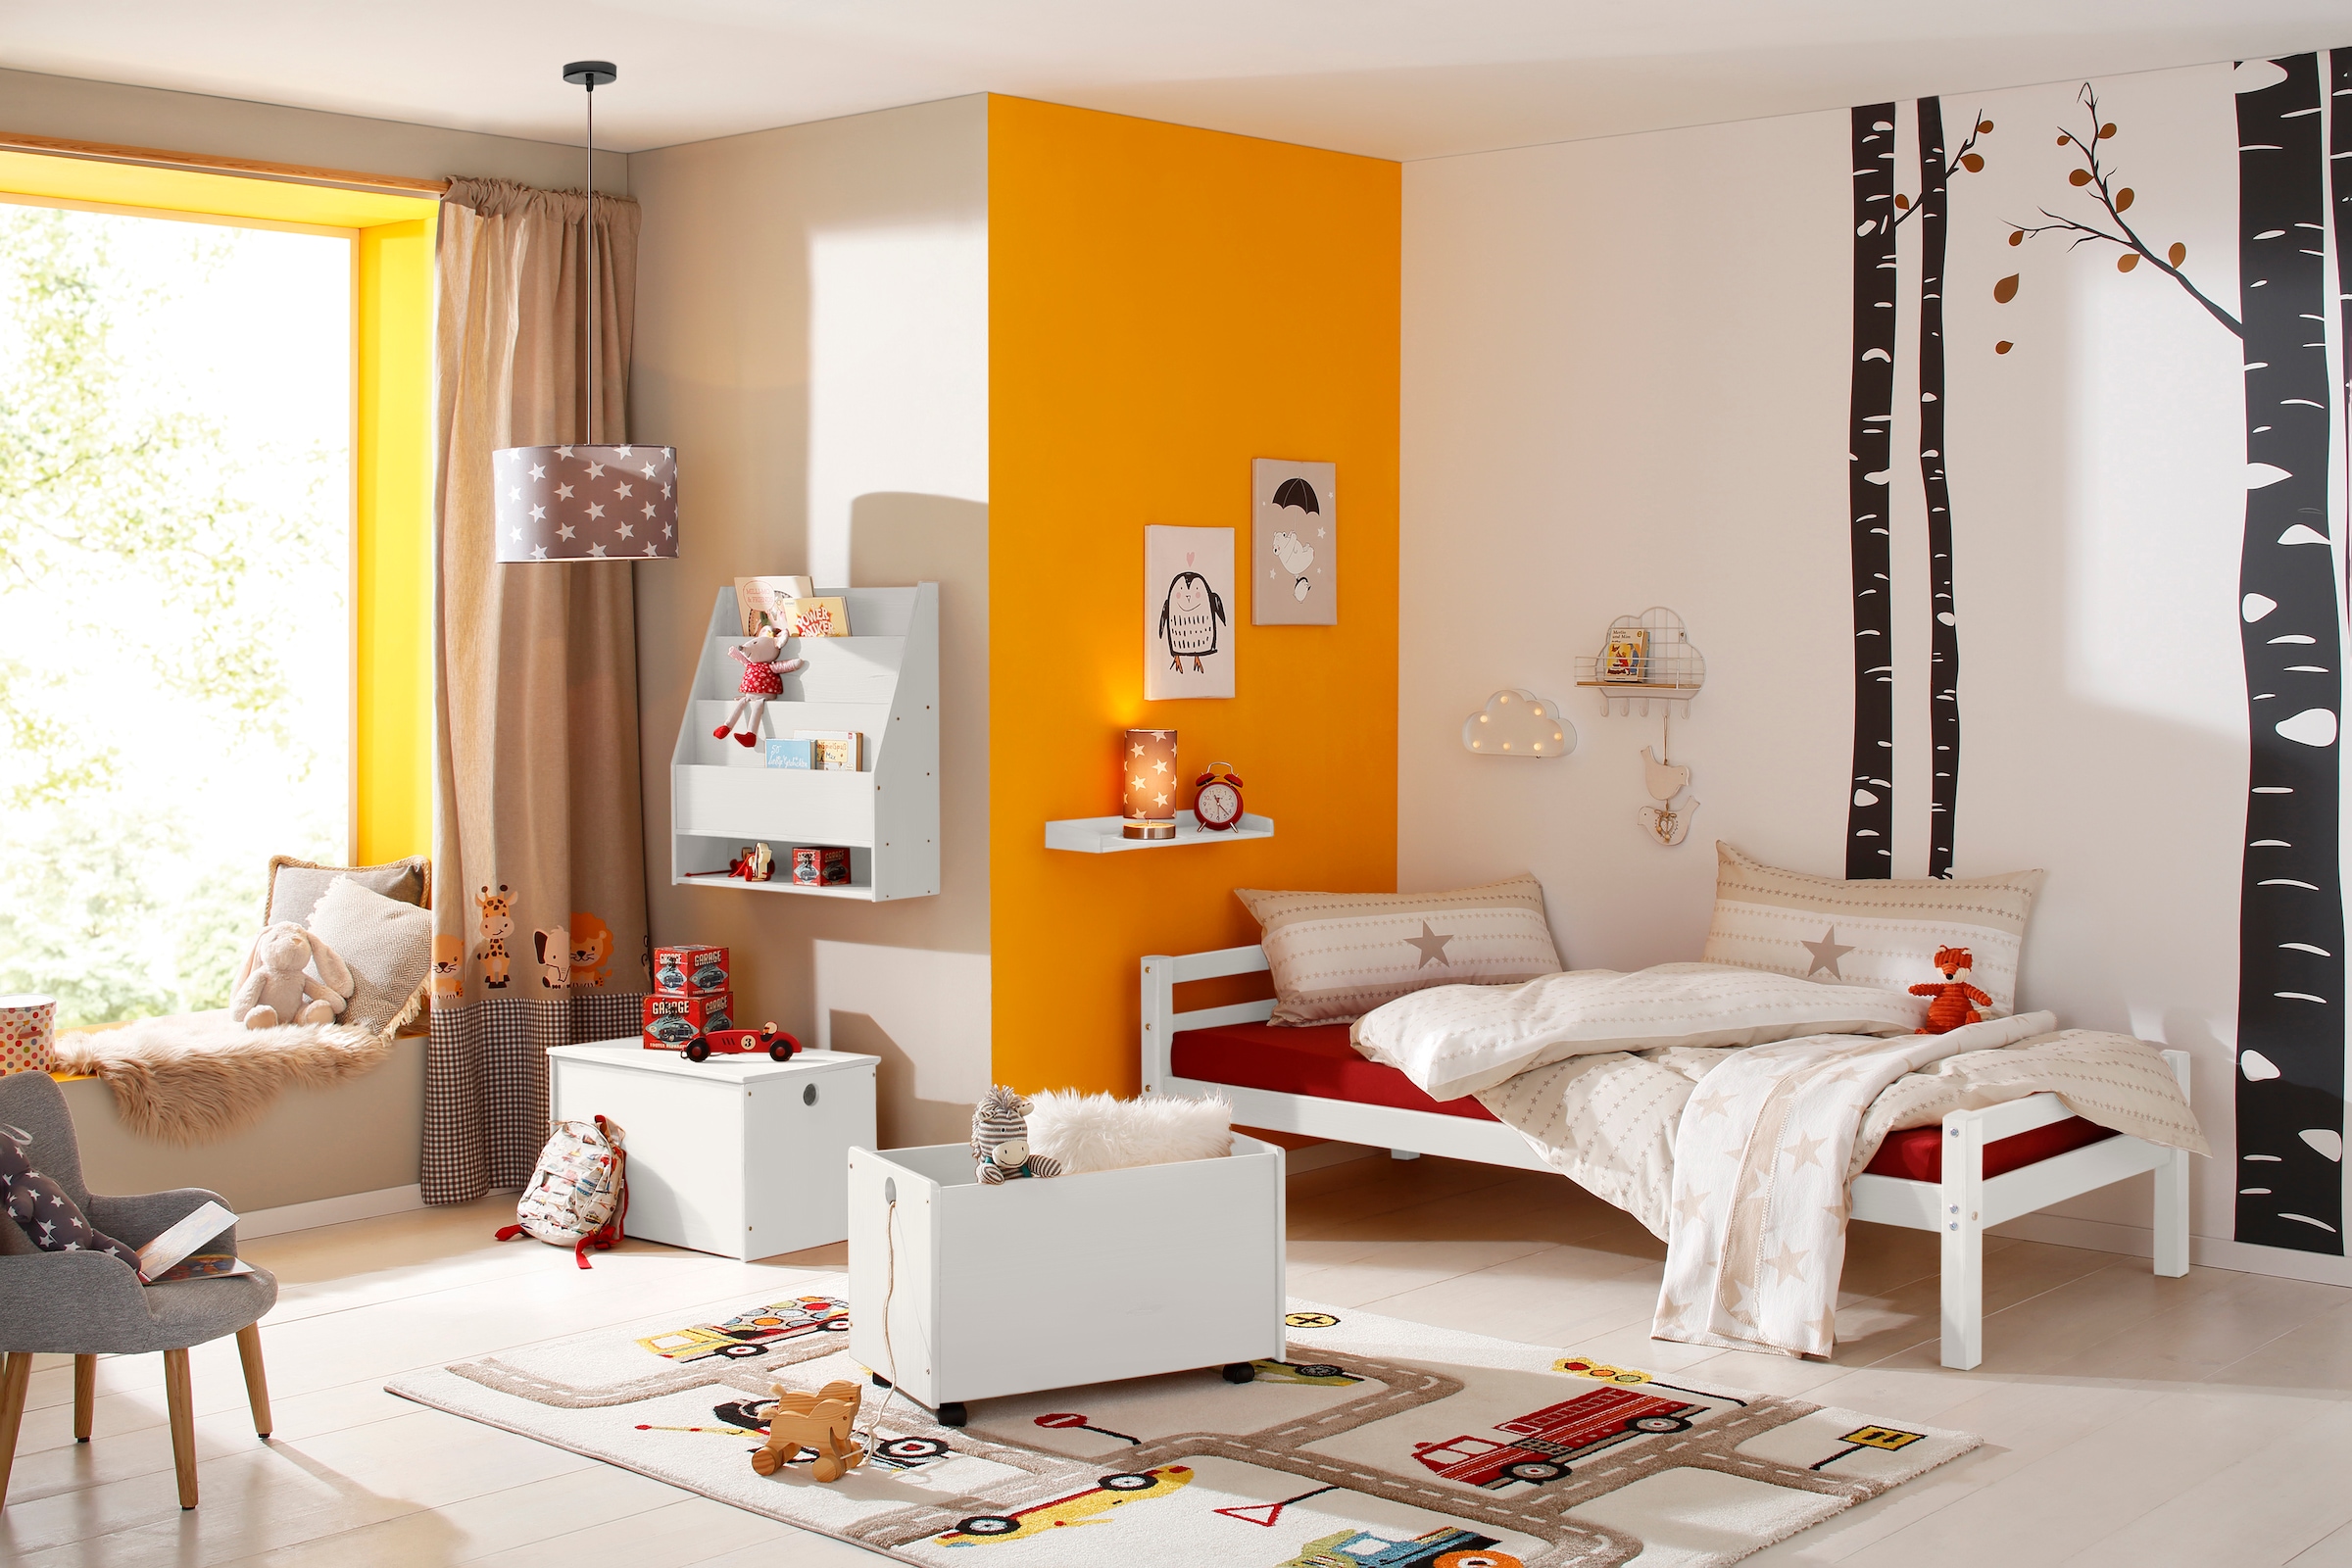 Lüttenhütt Kinderbett »Alpi«, Einzelbett aus schönem Kiefernholz, Lattenrost, Liegefläche 90x200 cm